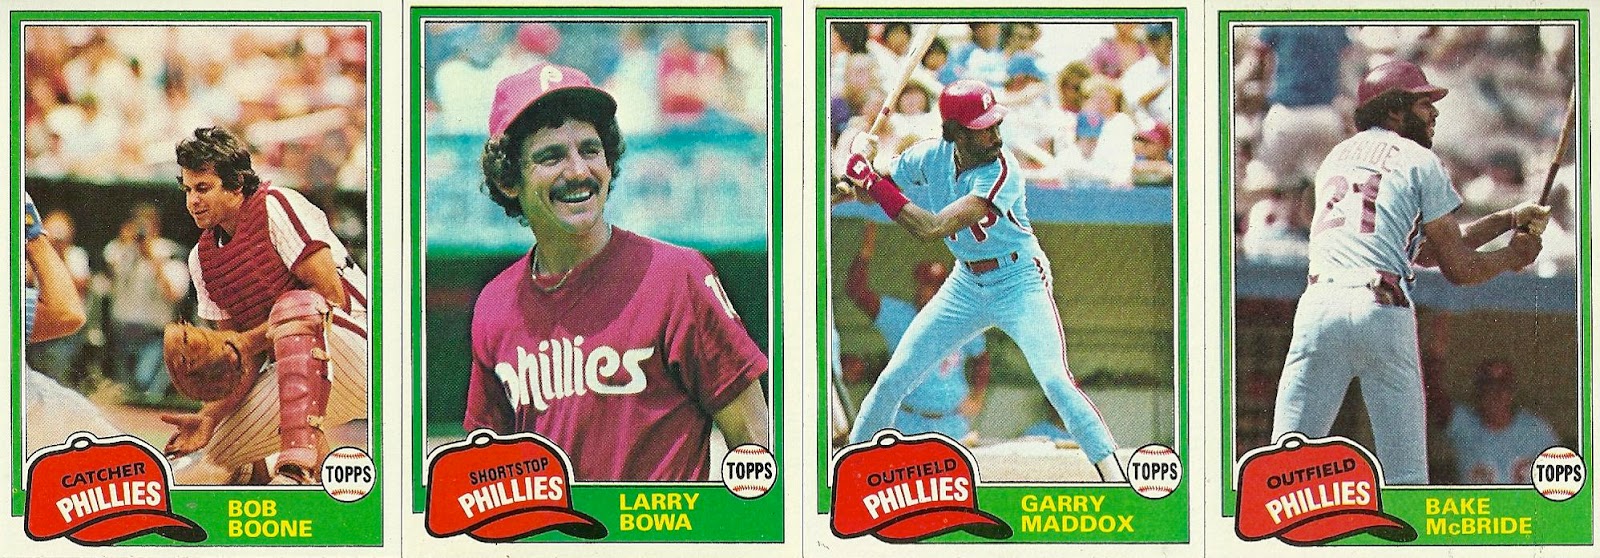 Lot Detail - Bob Boone 1981 Philadelphia Phillies Game Used